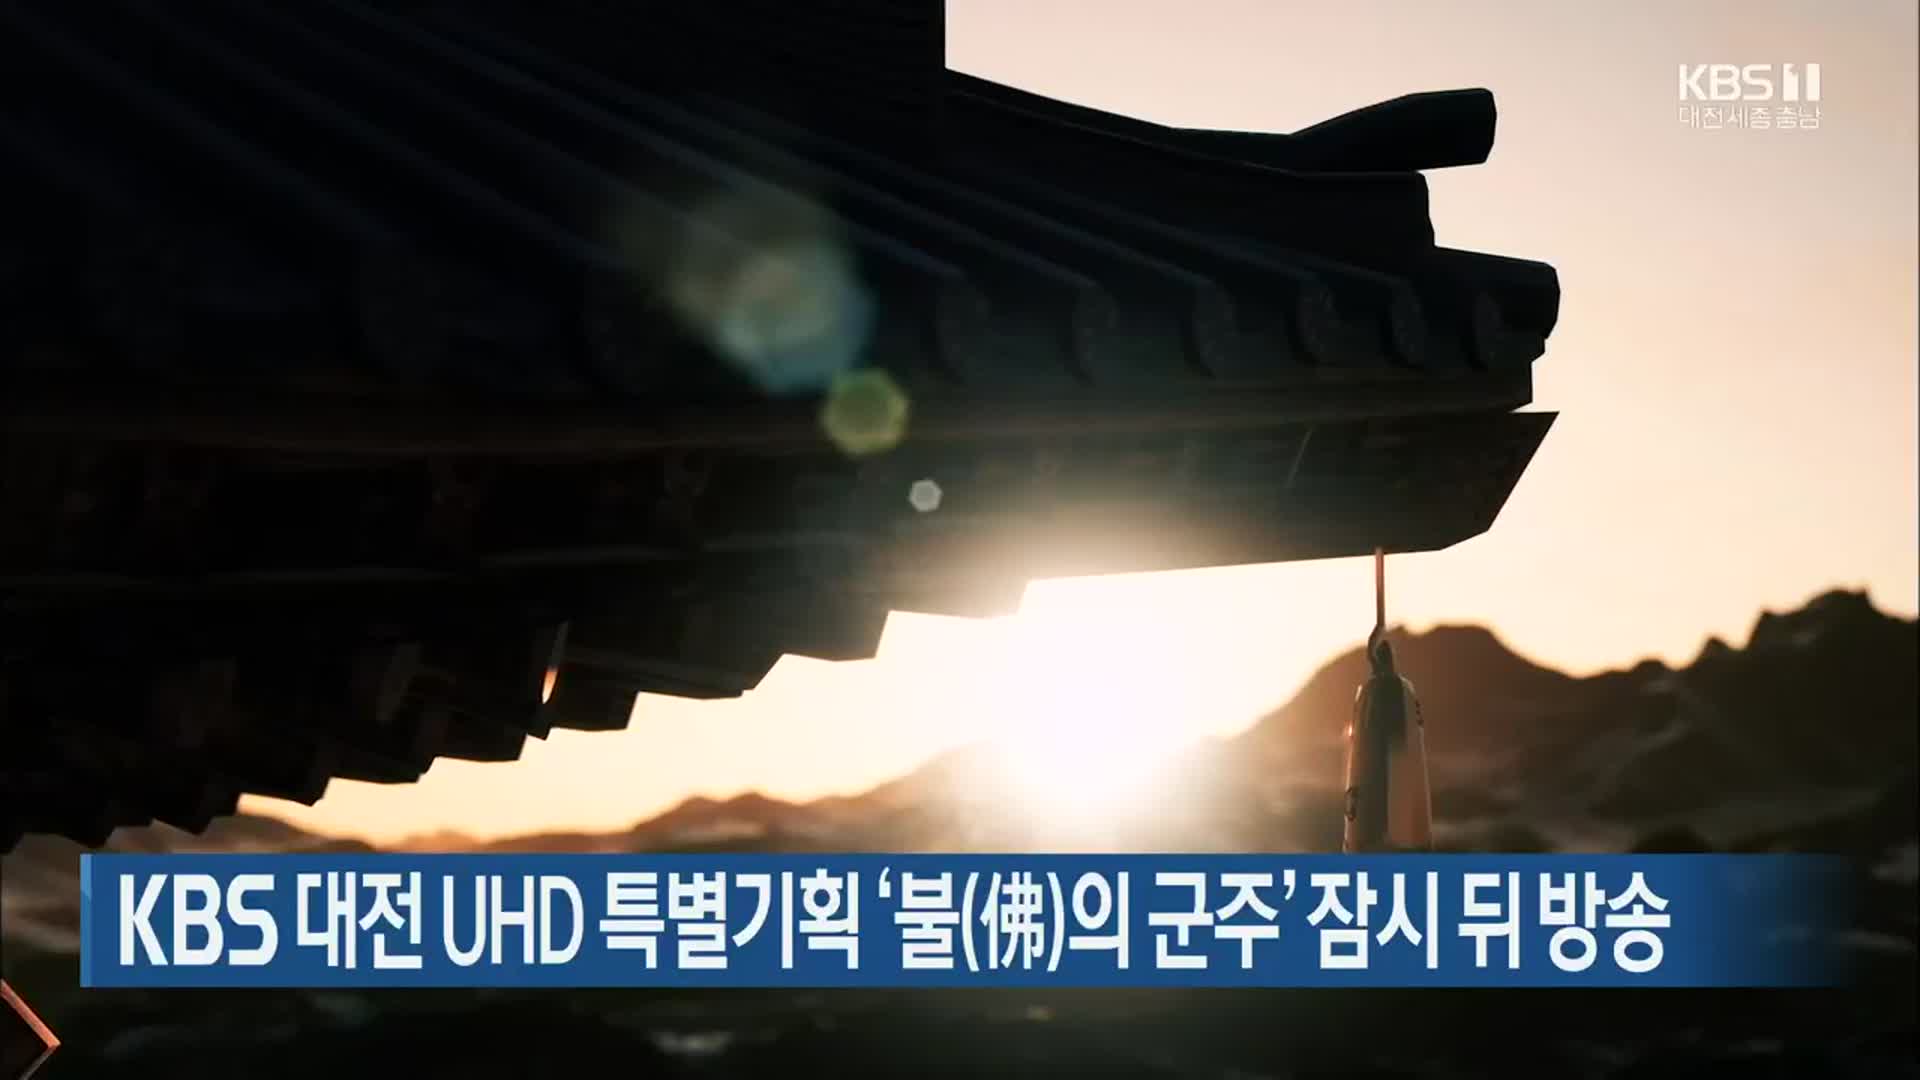 KBS 대전 UHD 특별기획 ‘불(佛)의 군주’ 잠시 뒤 방송